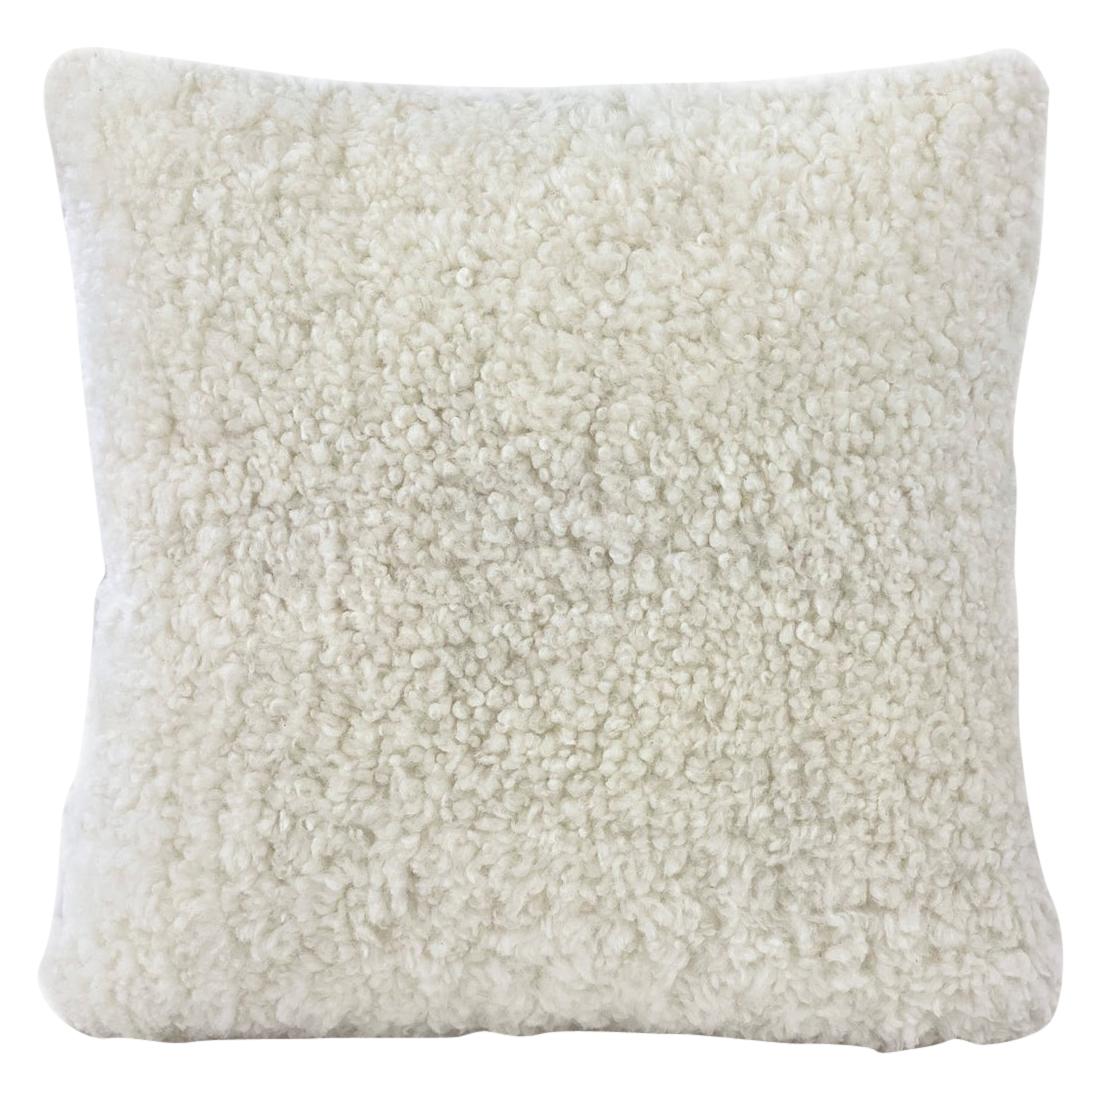 Shearling Sheepskin Pillow, White Square 16x16"  40x40cm For Sale